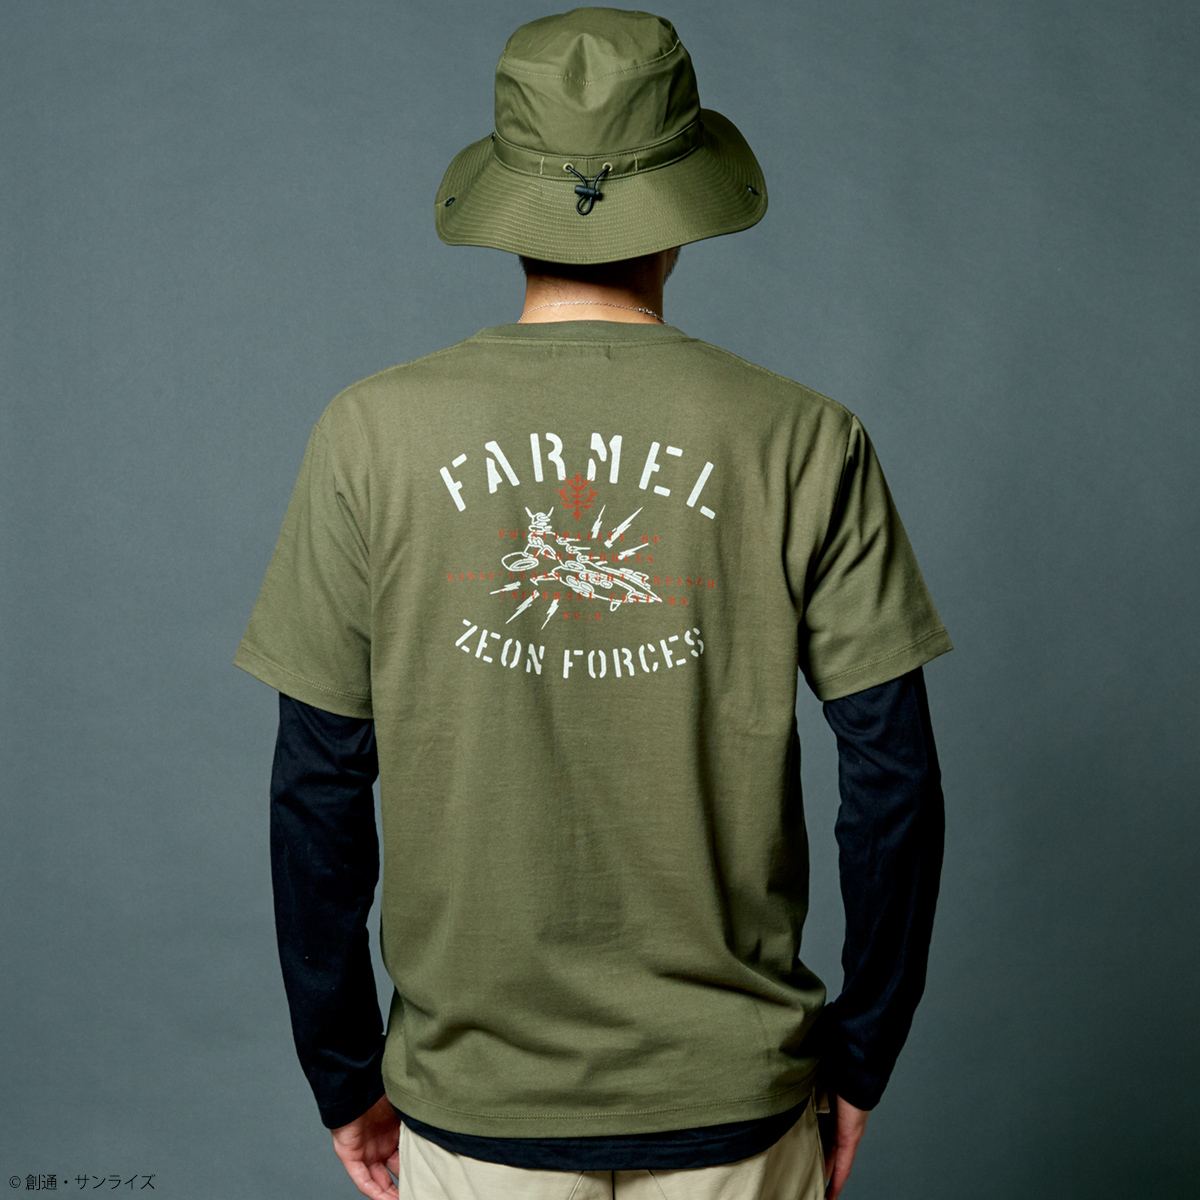 STRICT-G.ARMS『機動戦士ガンダム』 Tシャツ FARMEL柄